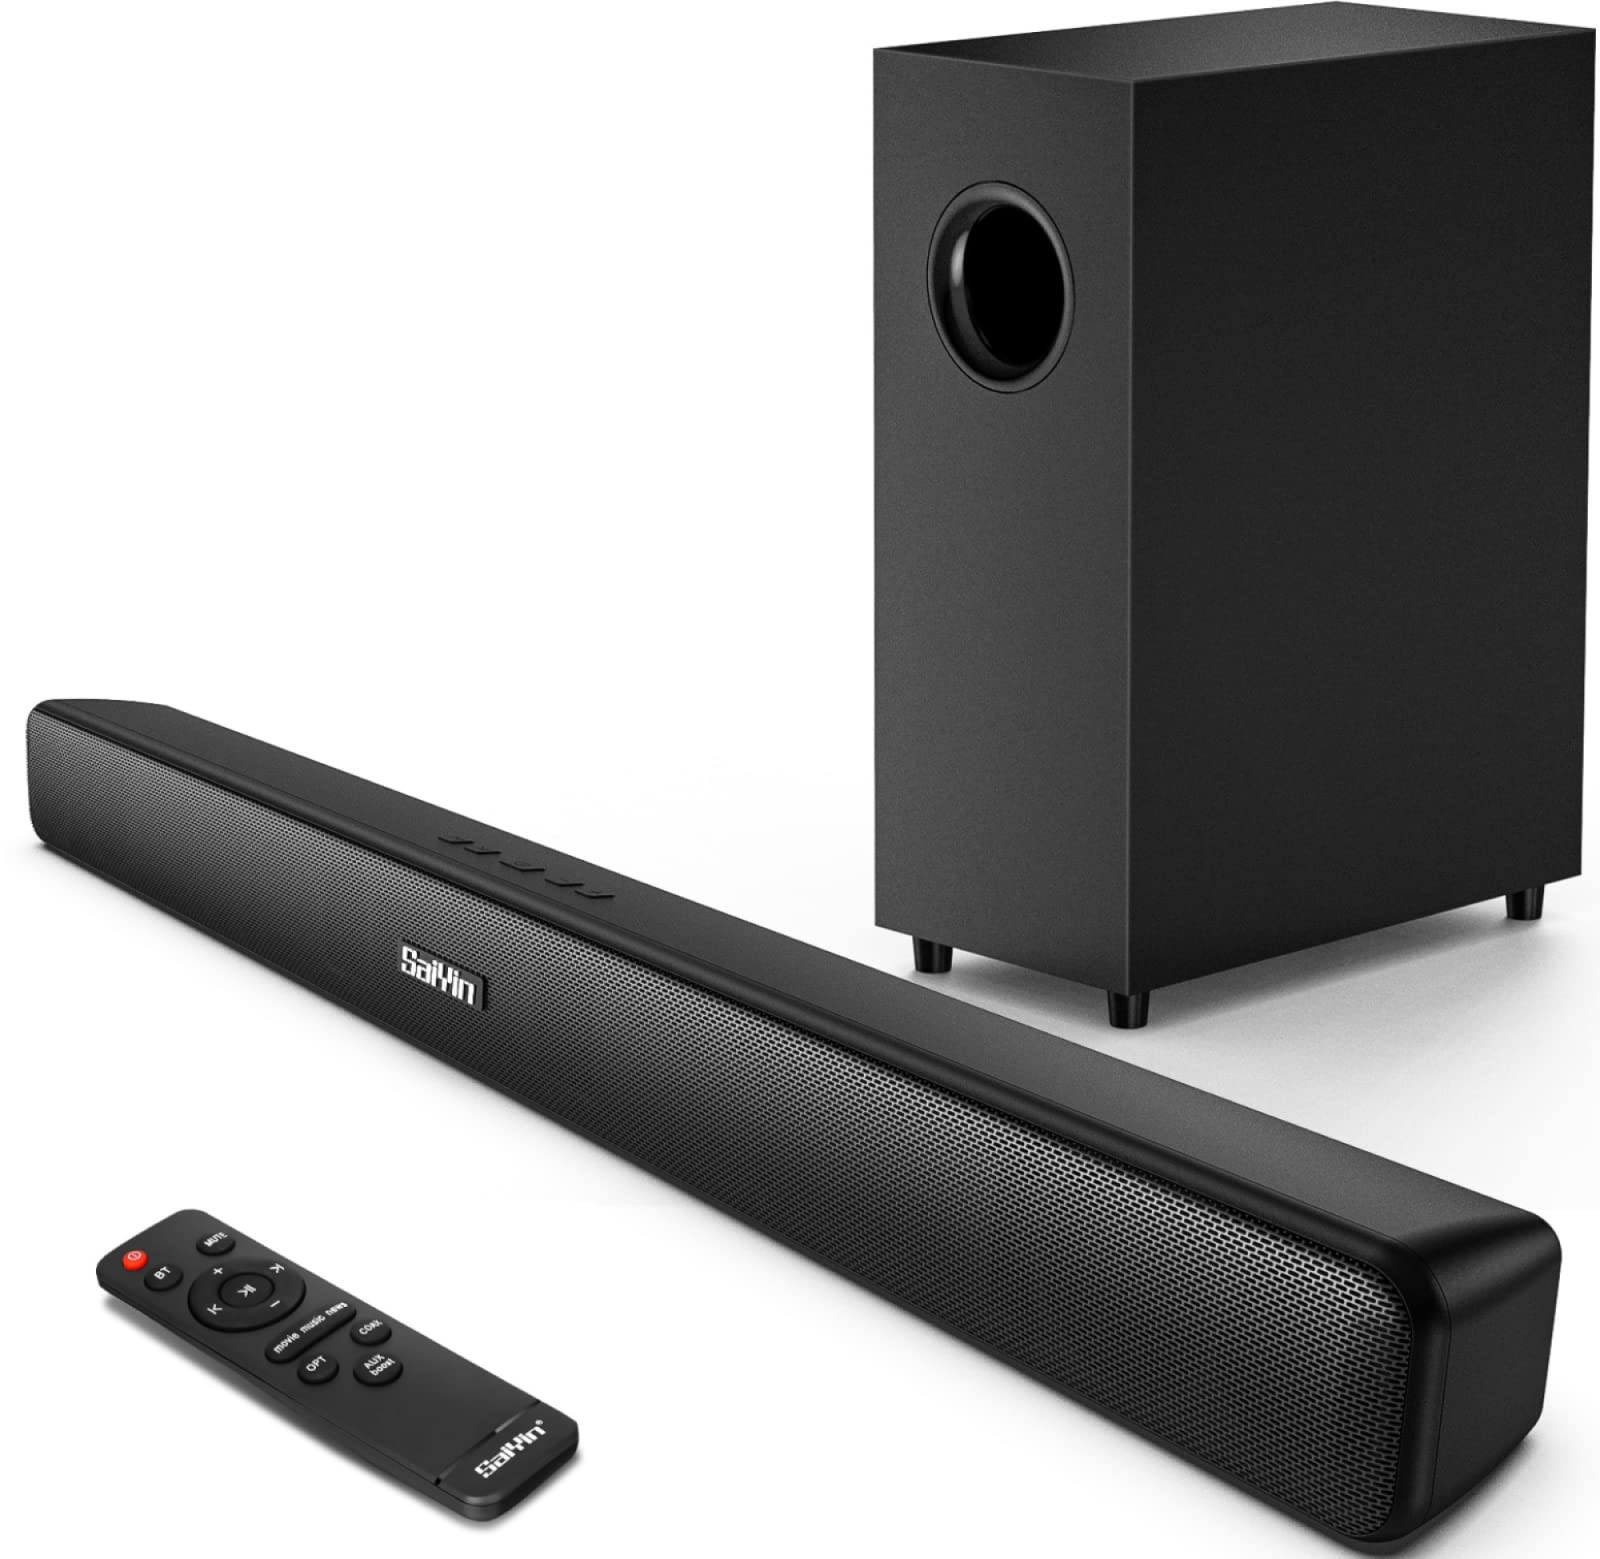 RIOWOIS Sound Bar Sound Bars for TV Soundbar Surround Sound System Home Theater Audio with Wireless Bluetooth 5.0 for PC G